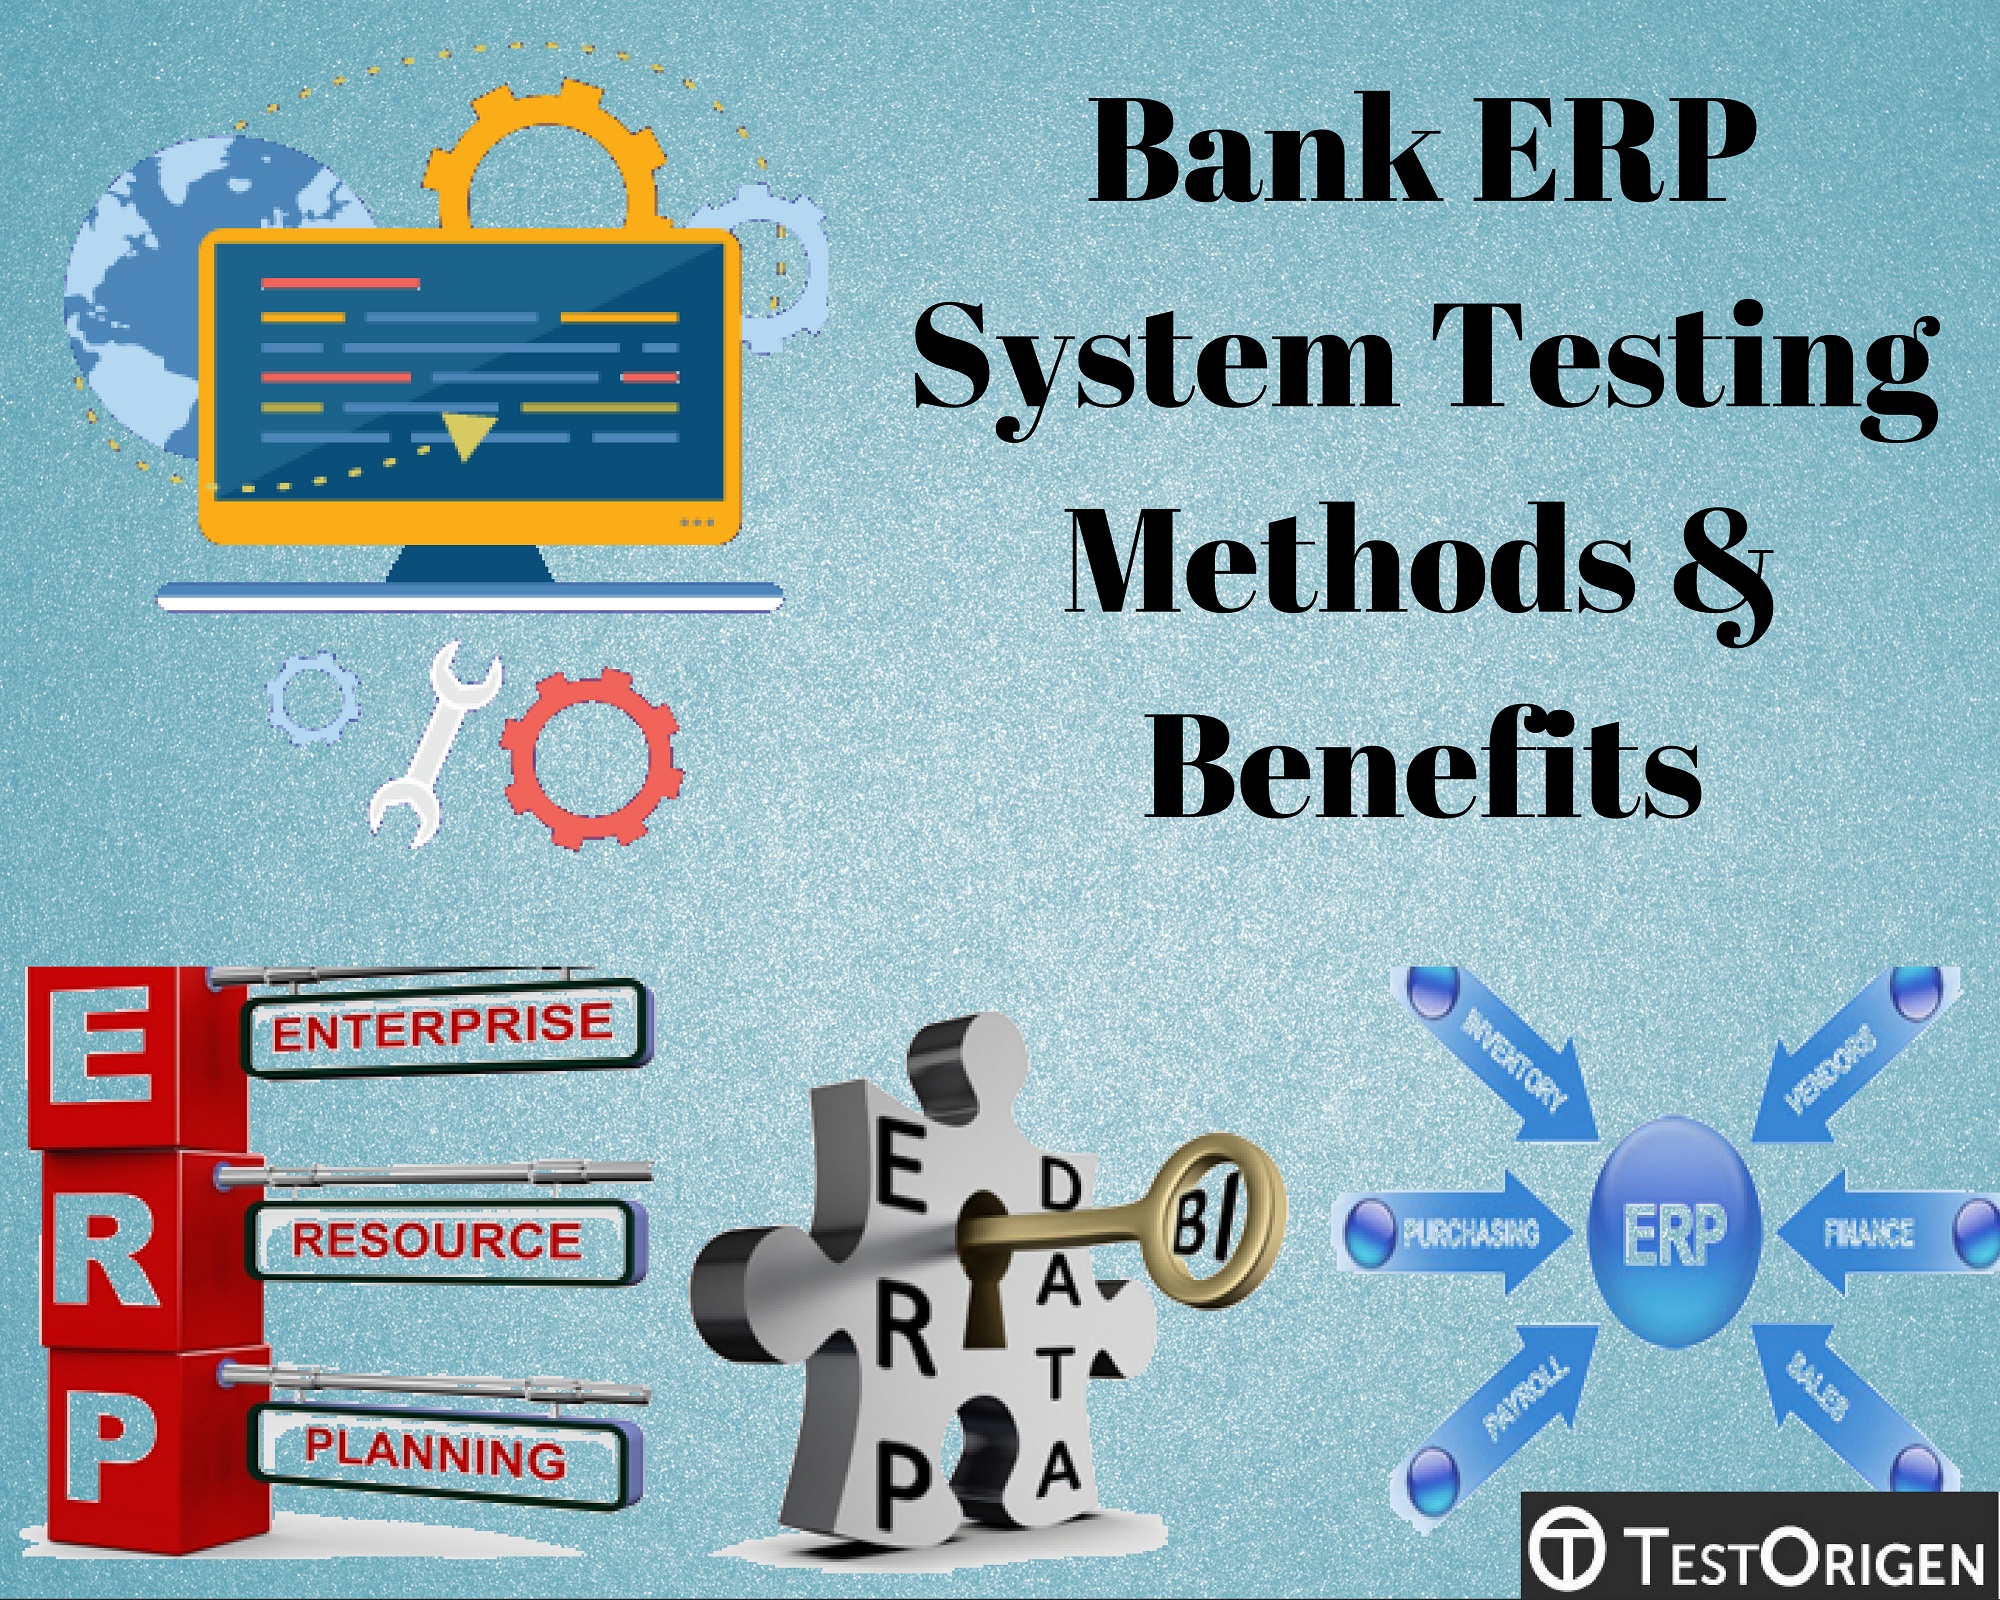 Bank ERP System Testing Methods & Benefits